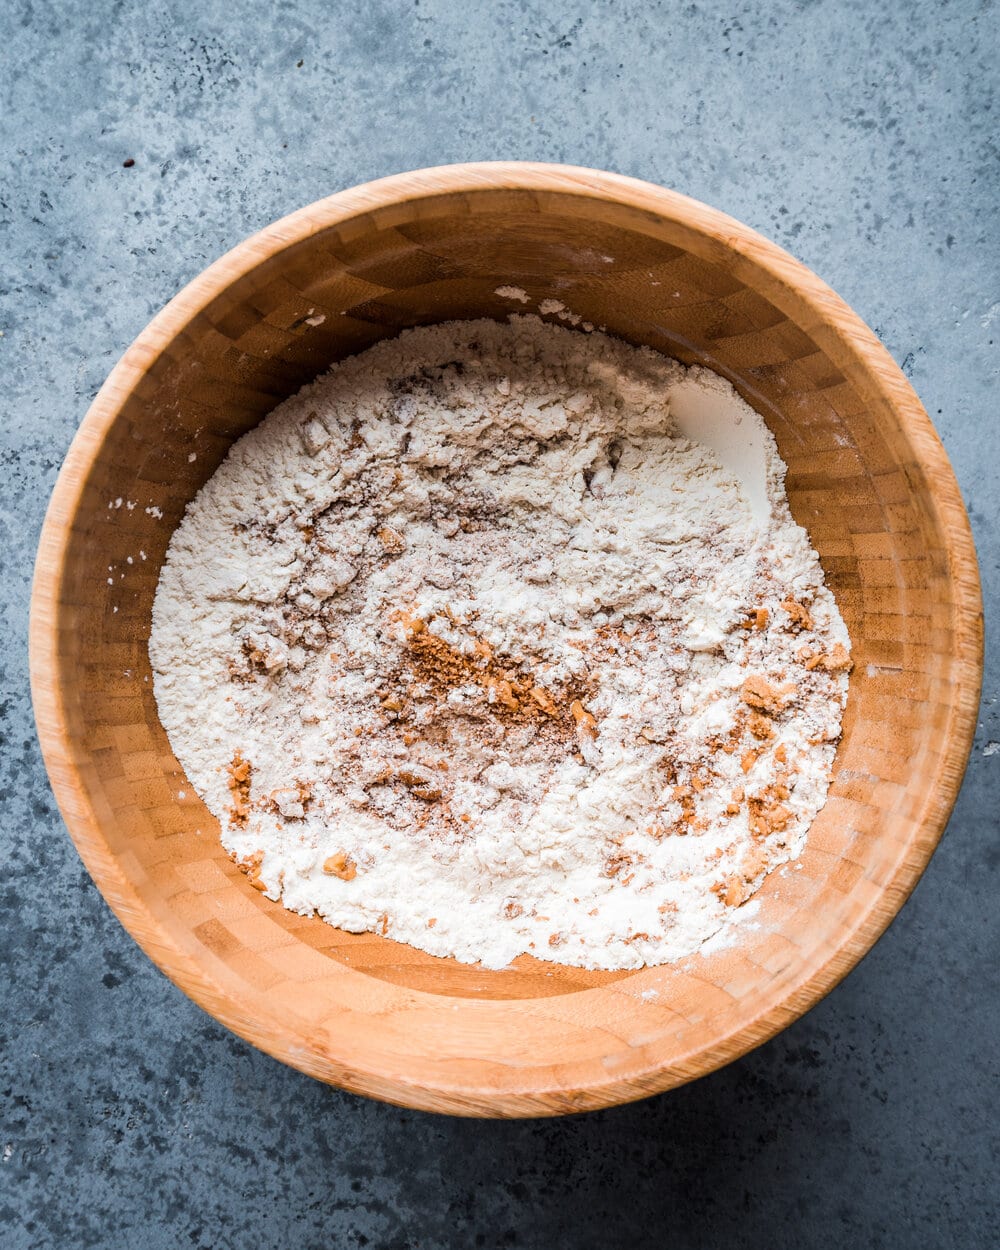 brown sugar and walnuts mixed with flour, baking powder, baking soda, and salt in bowl